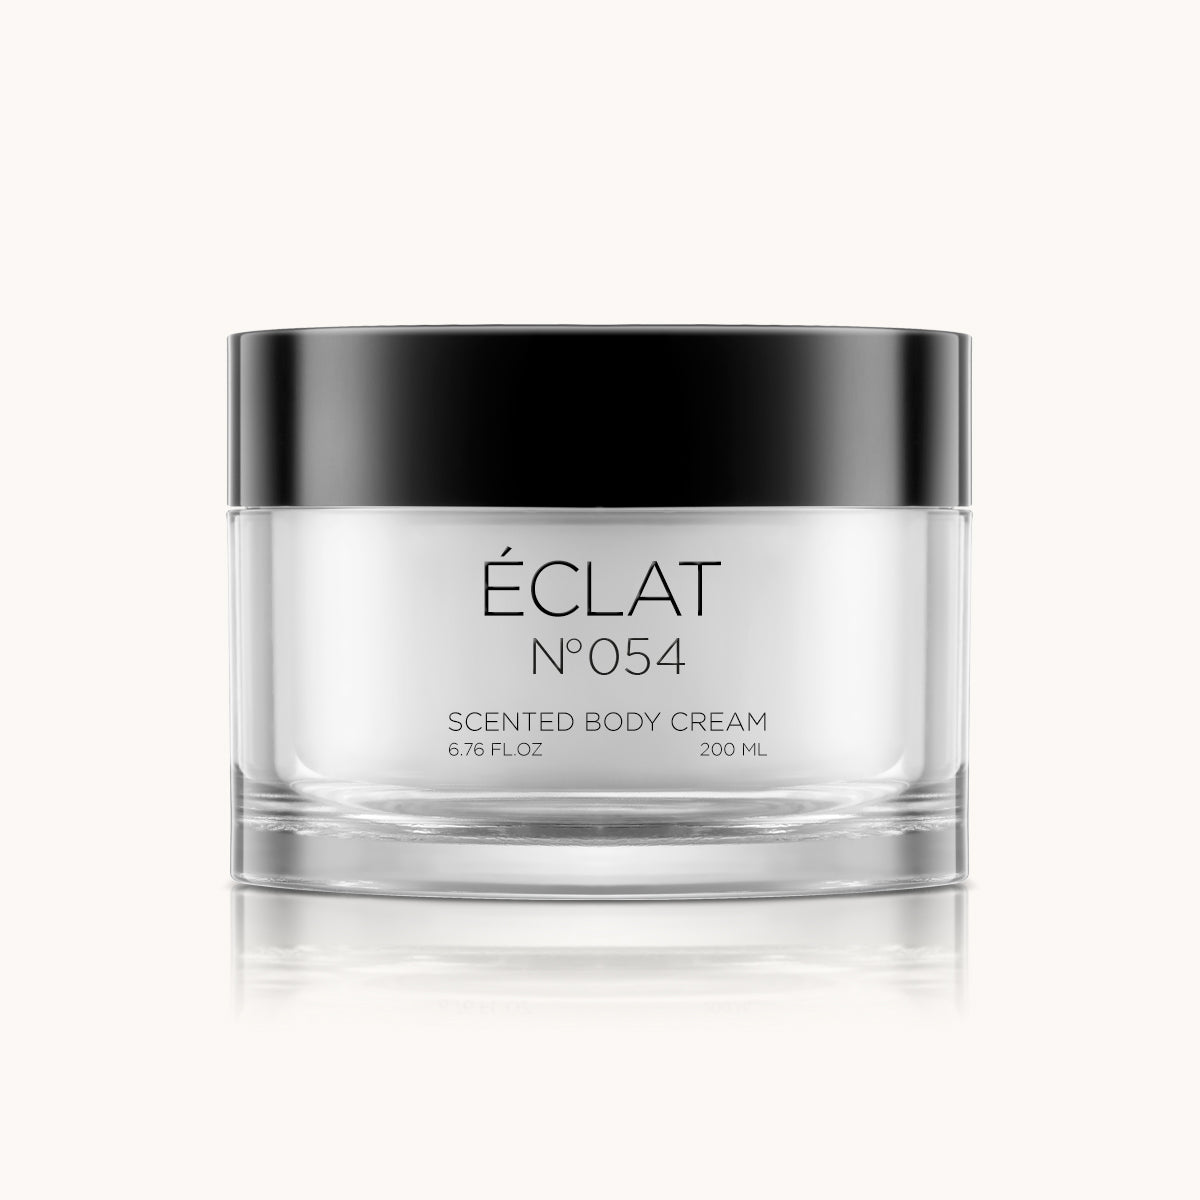 ÉCLAT 054 Body Cream